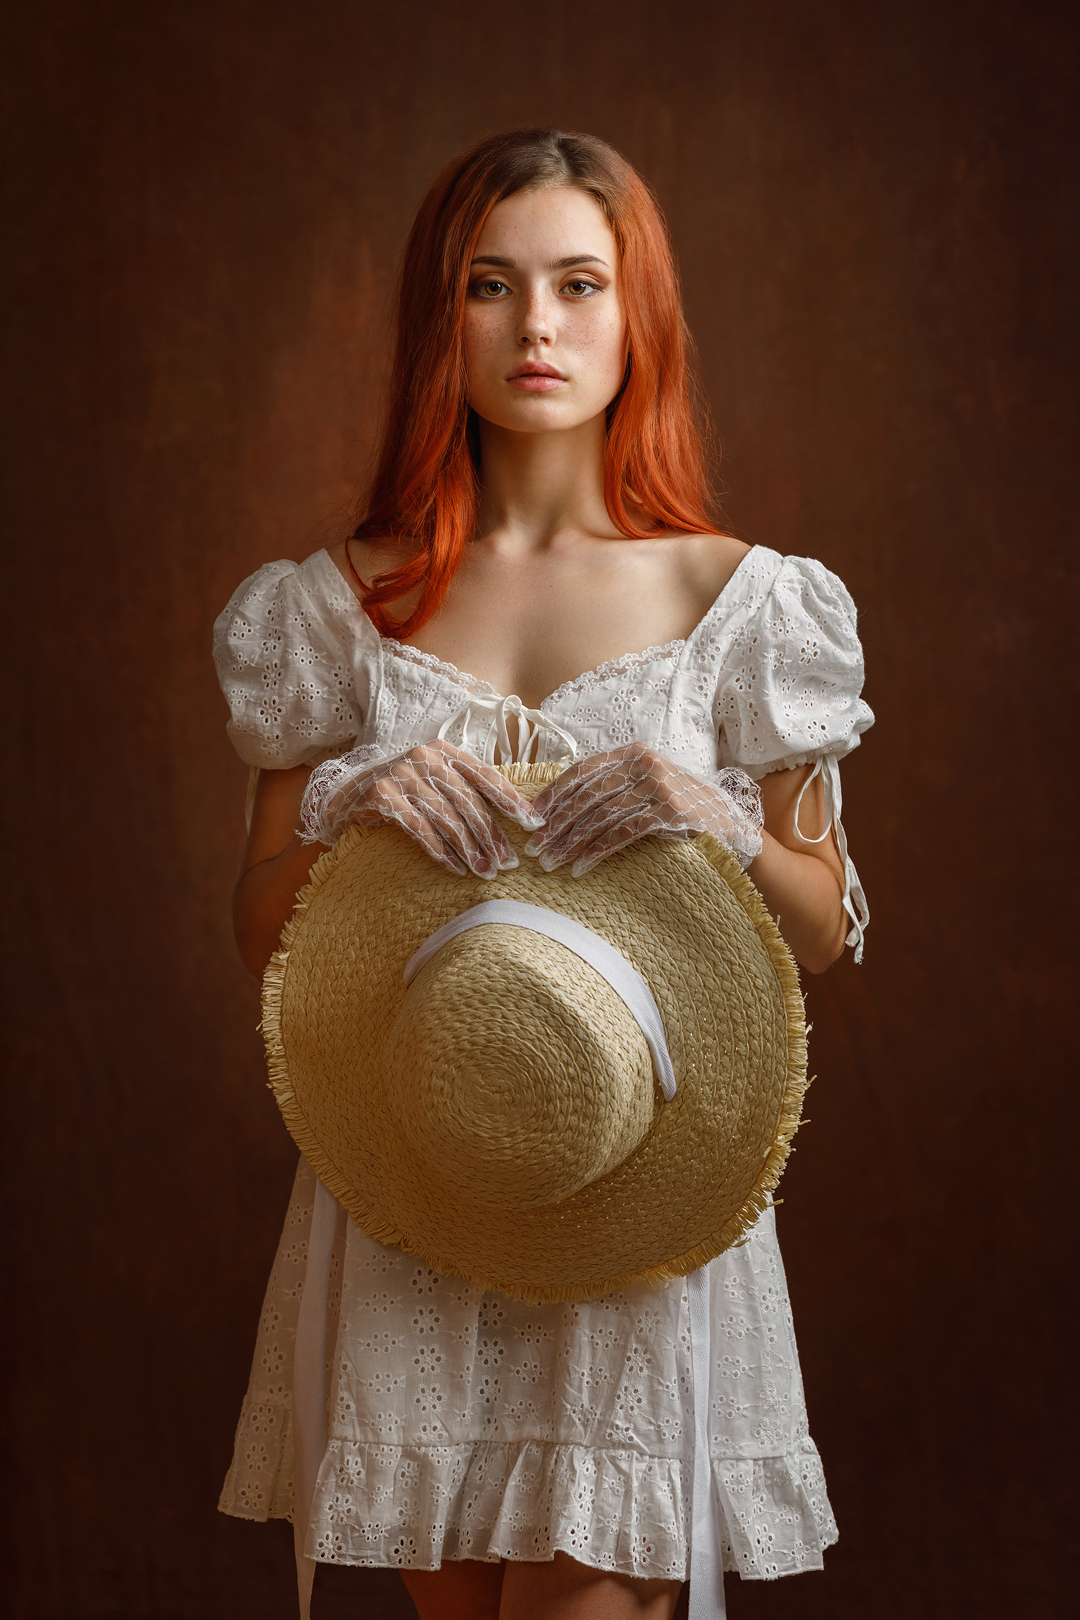 Sergey Sergeev Women Redhead Long Hair Looking At Viewer Dress White Clothing Hat Straw Hat Simple B 1080x1620